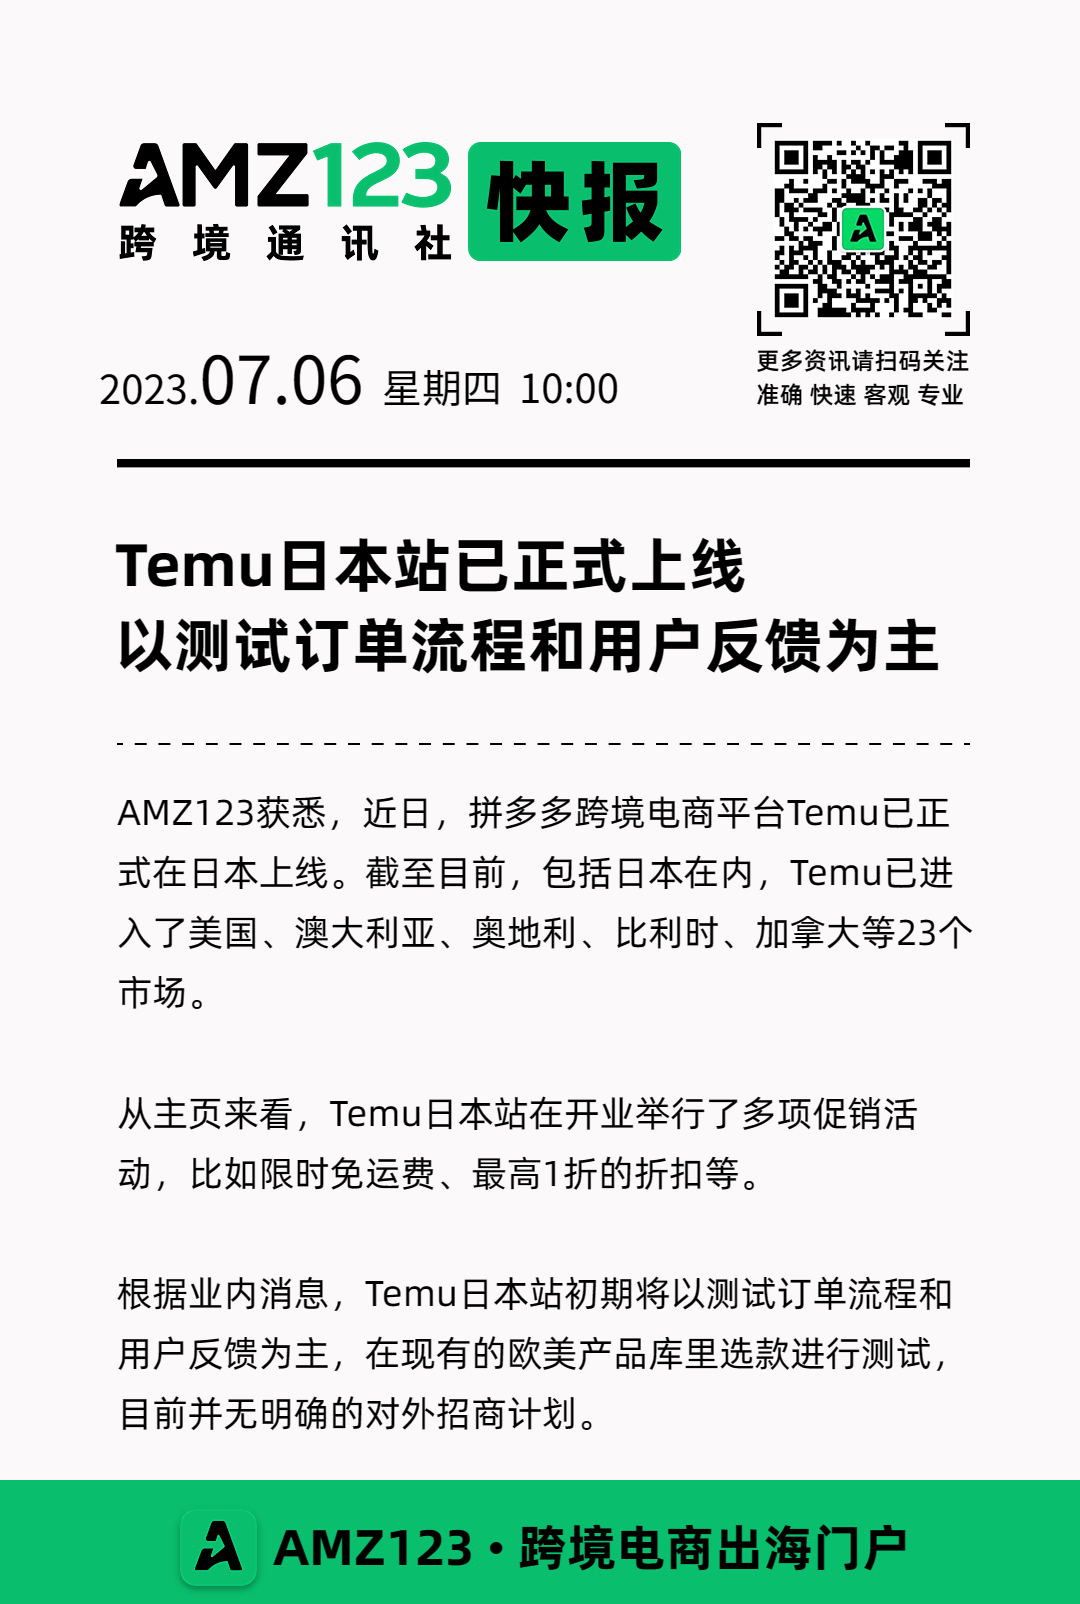 Temu日本站已正式上线，以测试订单流程和用户反馈为主